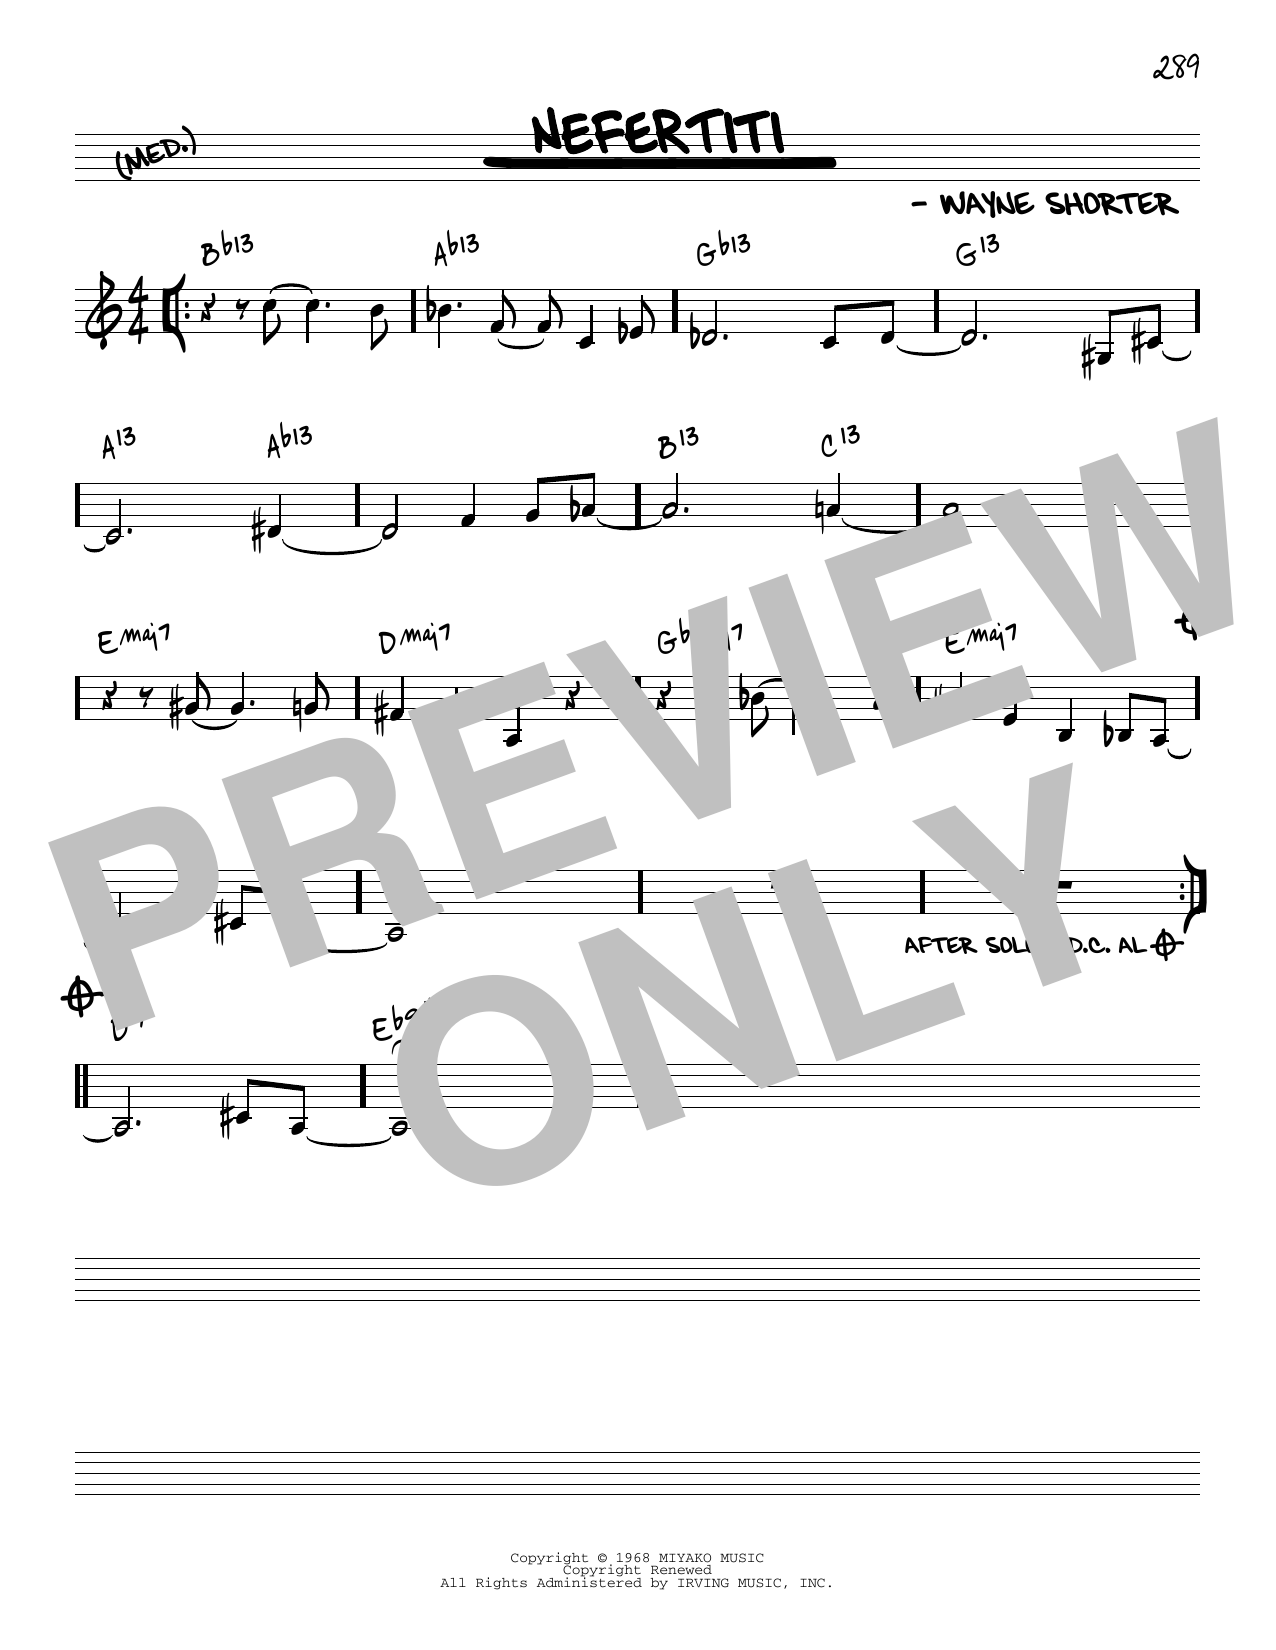 Wayne Shorter Nefertiti [Reharmonized version] (arr. Jack Grassel) Sheet Music Notes & Chords for Real Book – Melody & Chords - Download or Print PDF